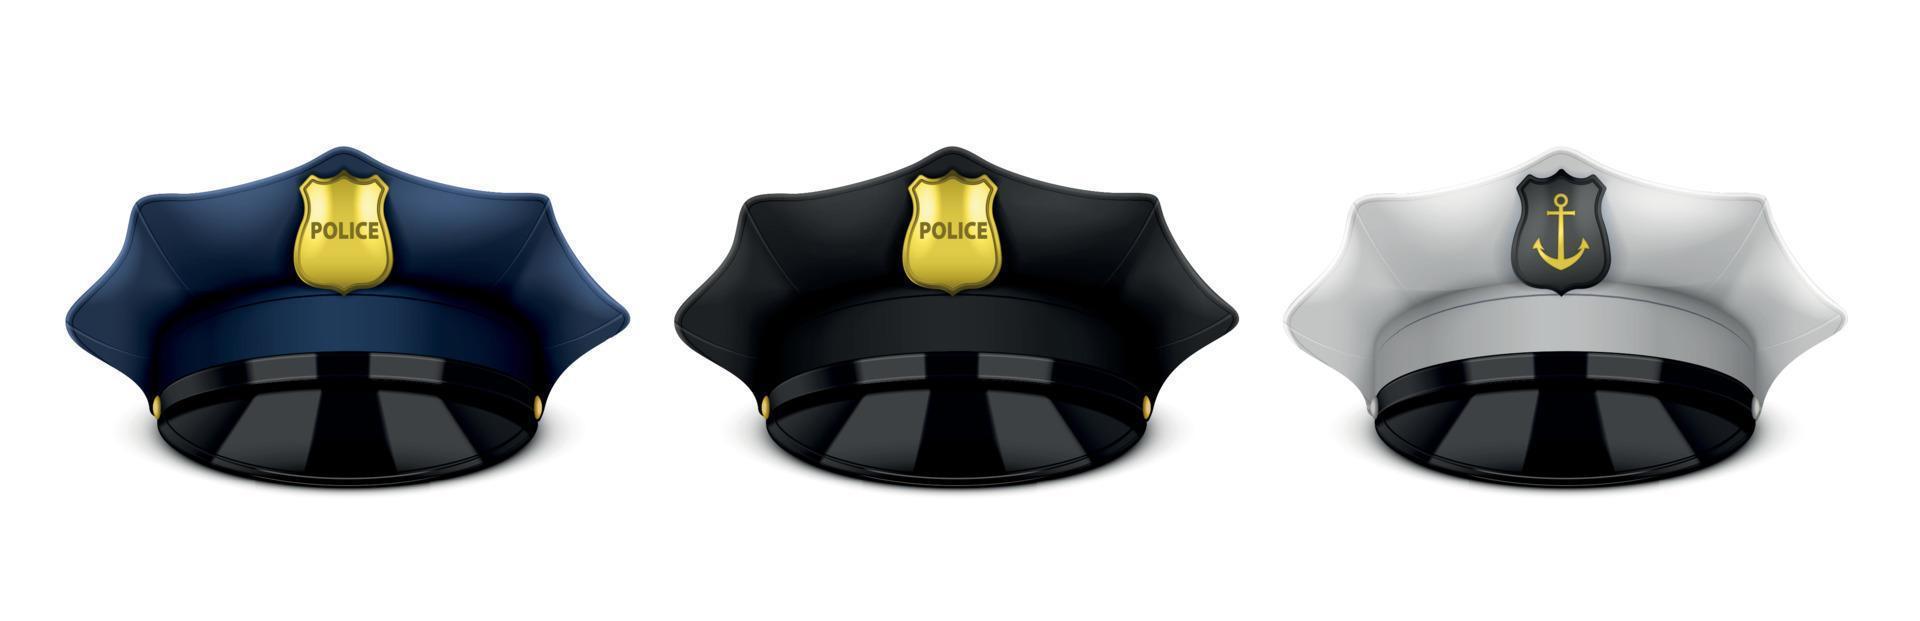 polis hatt set vektor